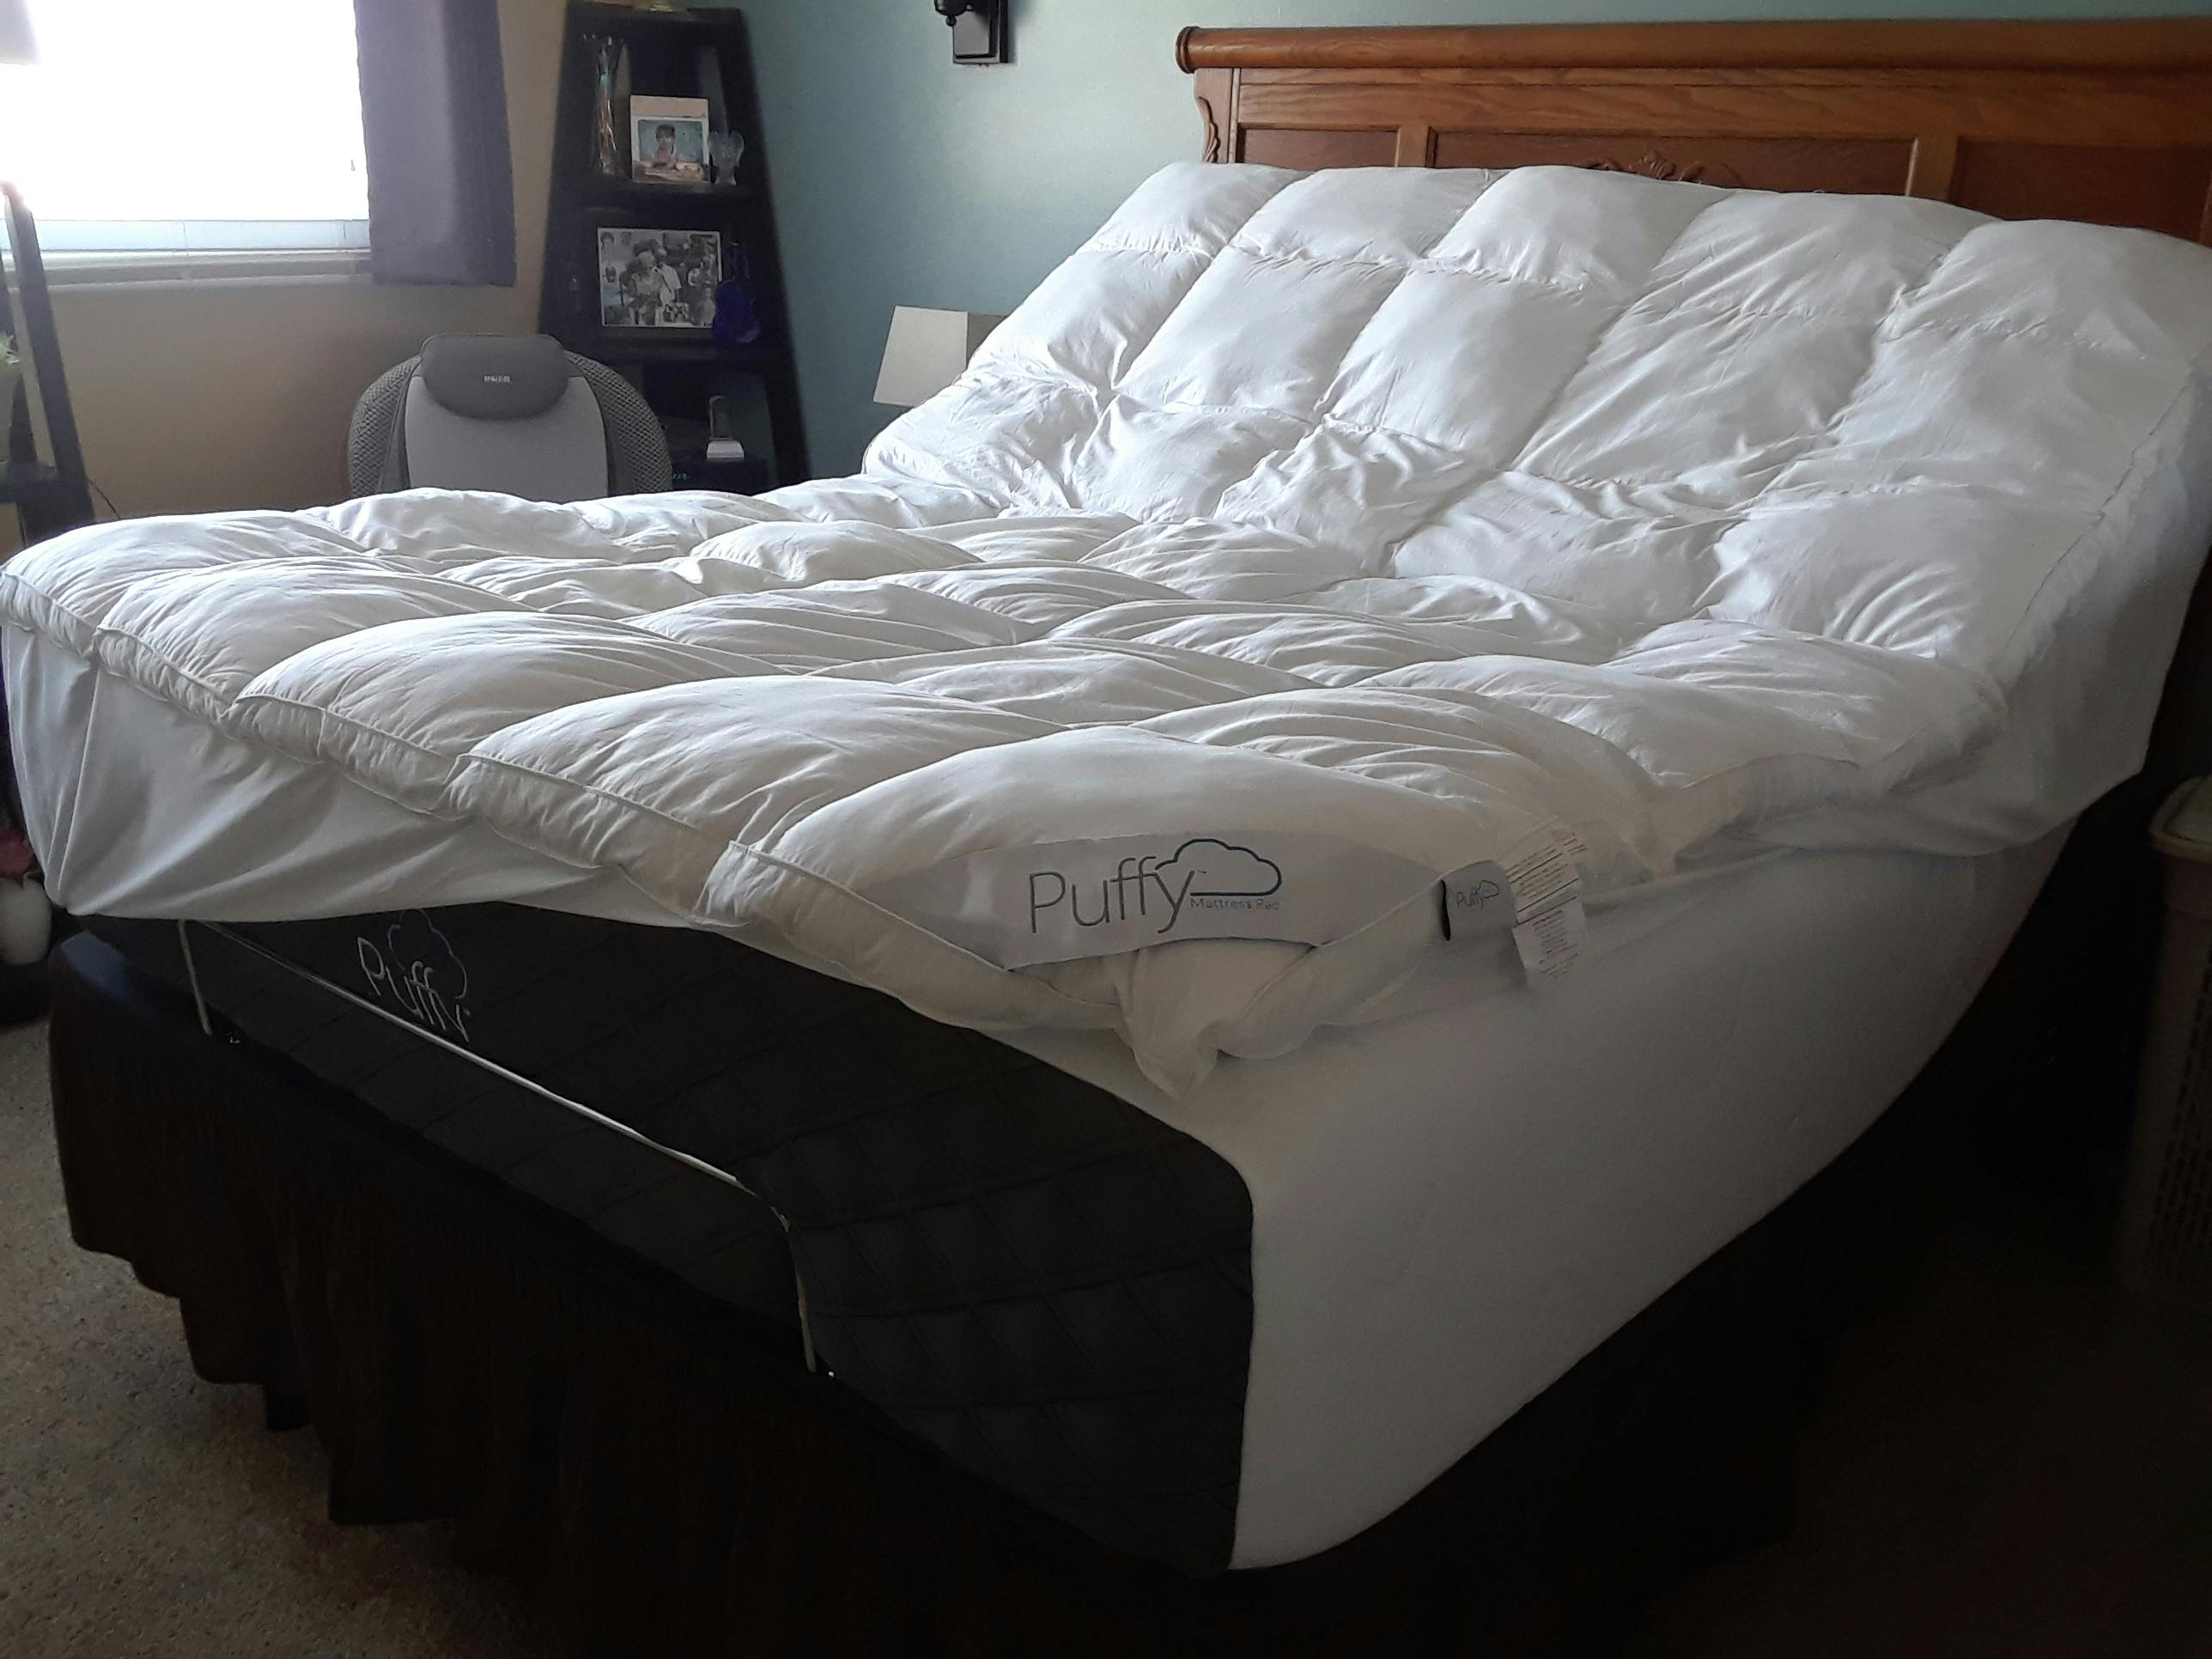 consumer reviews of puffy mattress